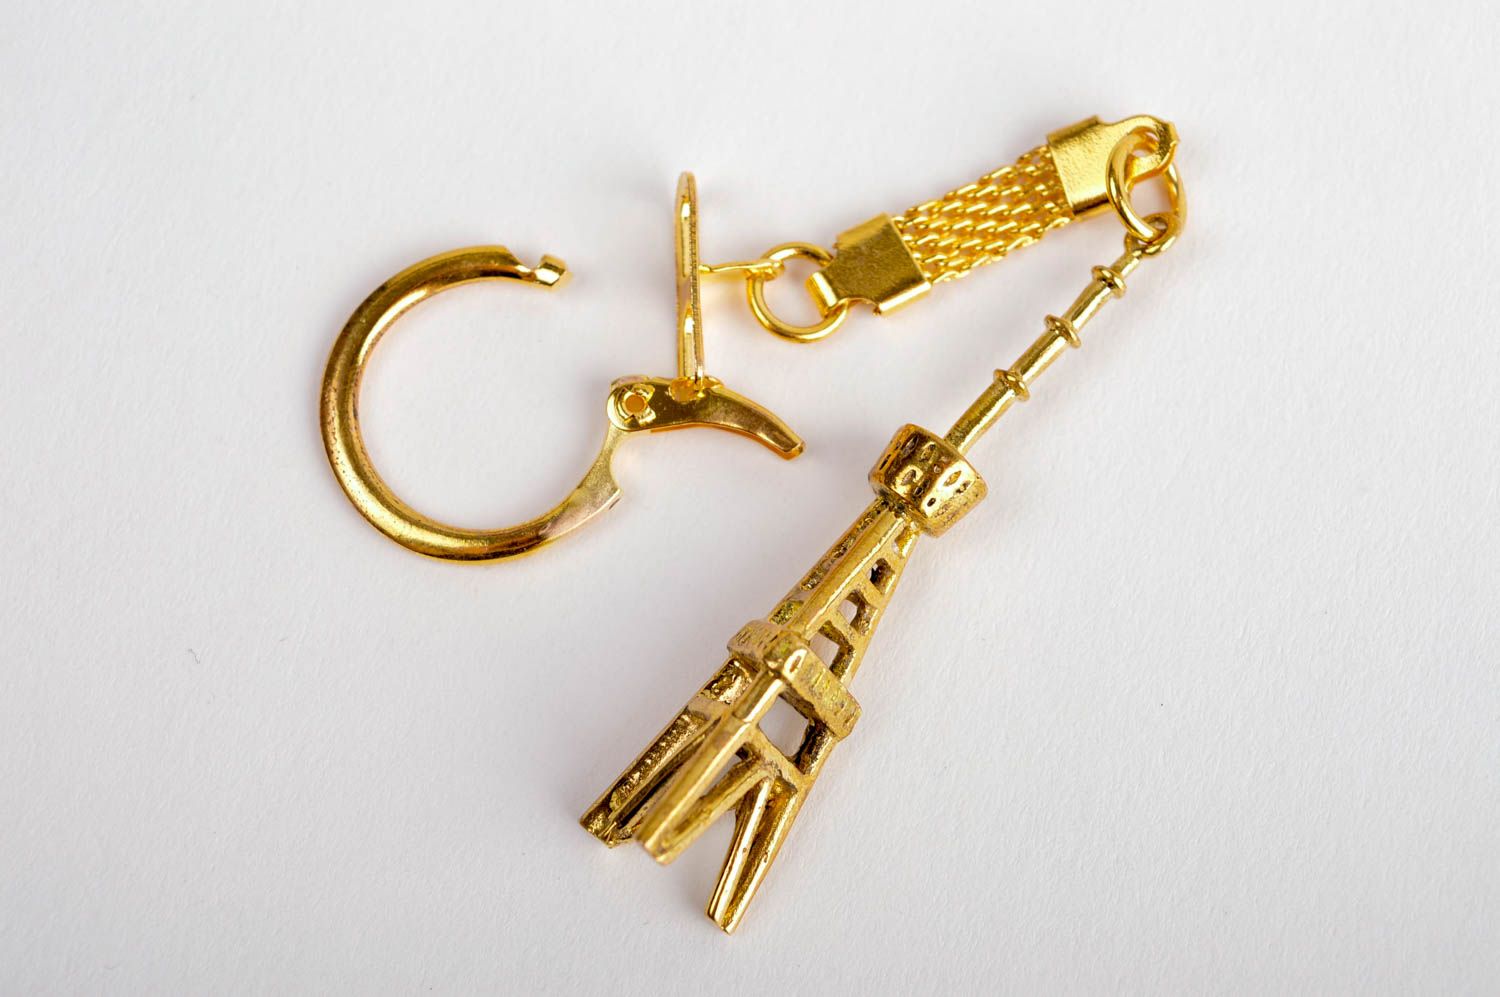 Unusual handmade metal keychain handmade accessories cool keyrings gift ideas photo 4